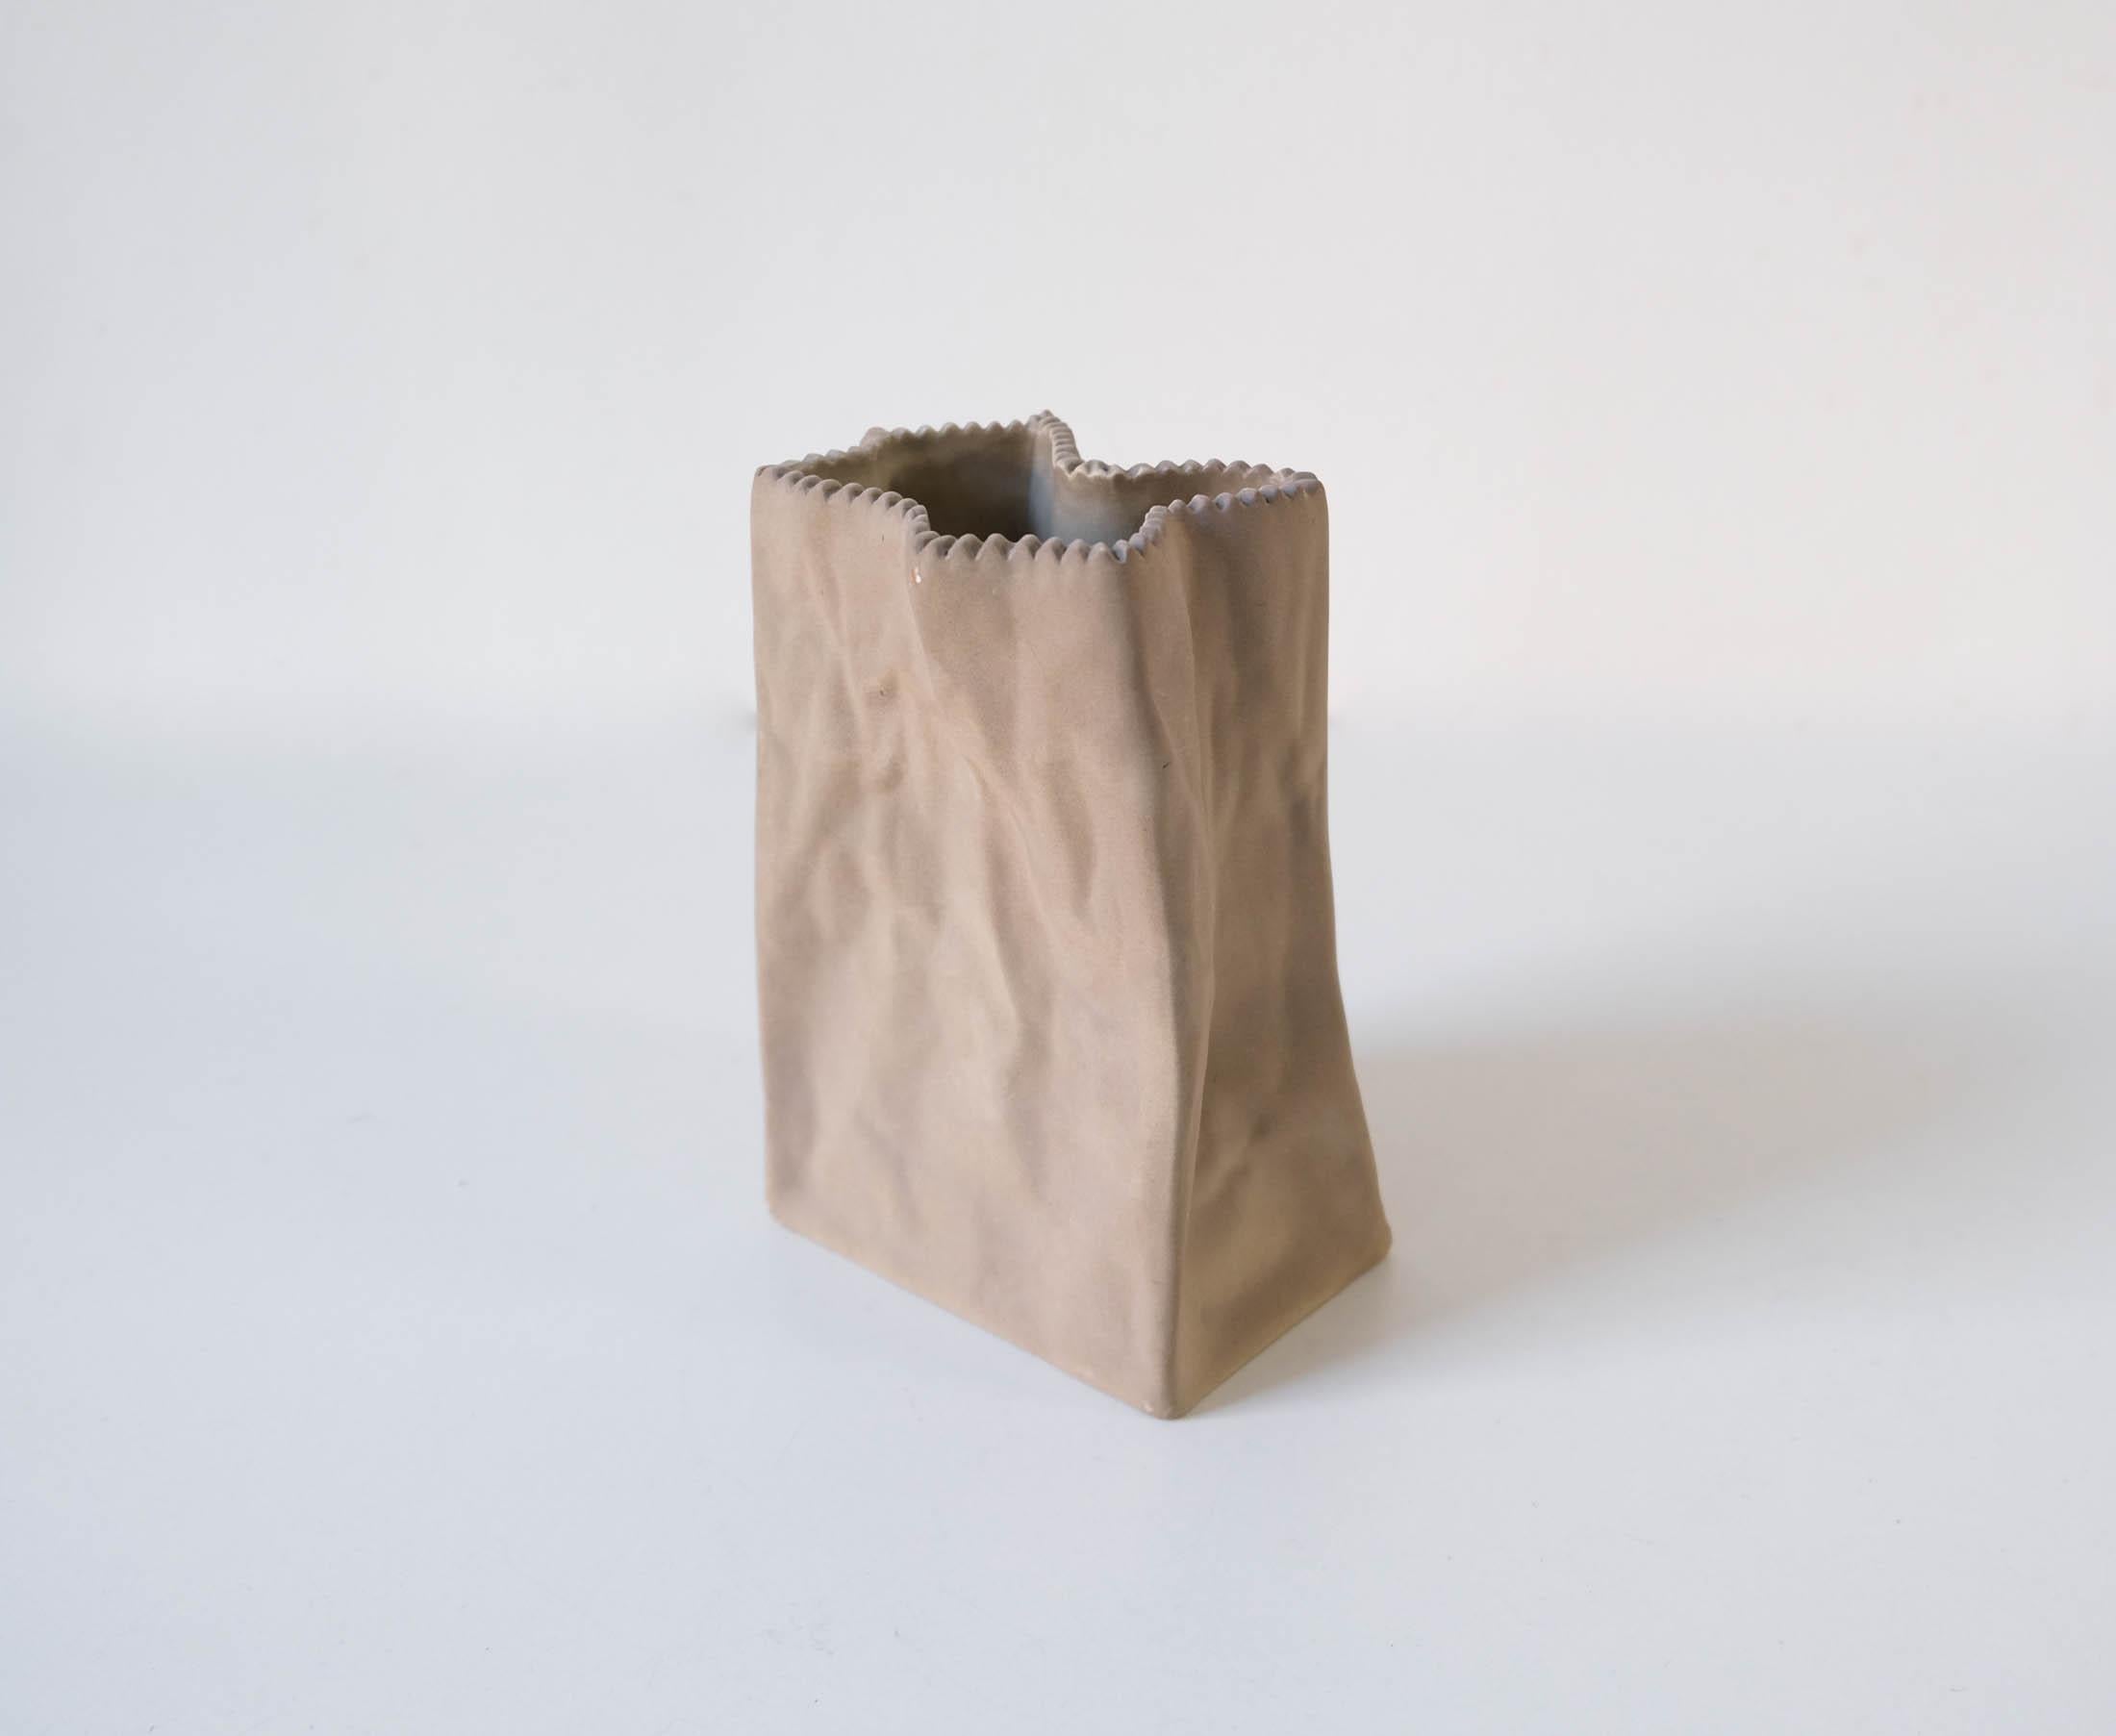 German Mid-Century Pop Art Tapio Wirkkala “Paper Bag